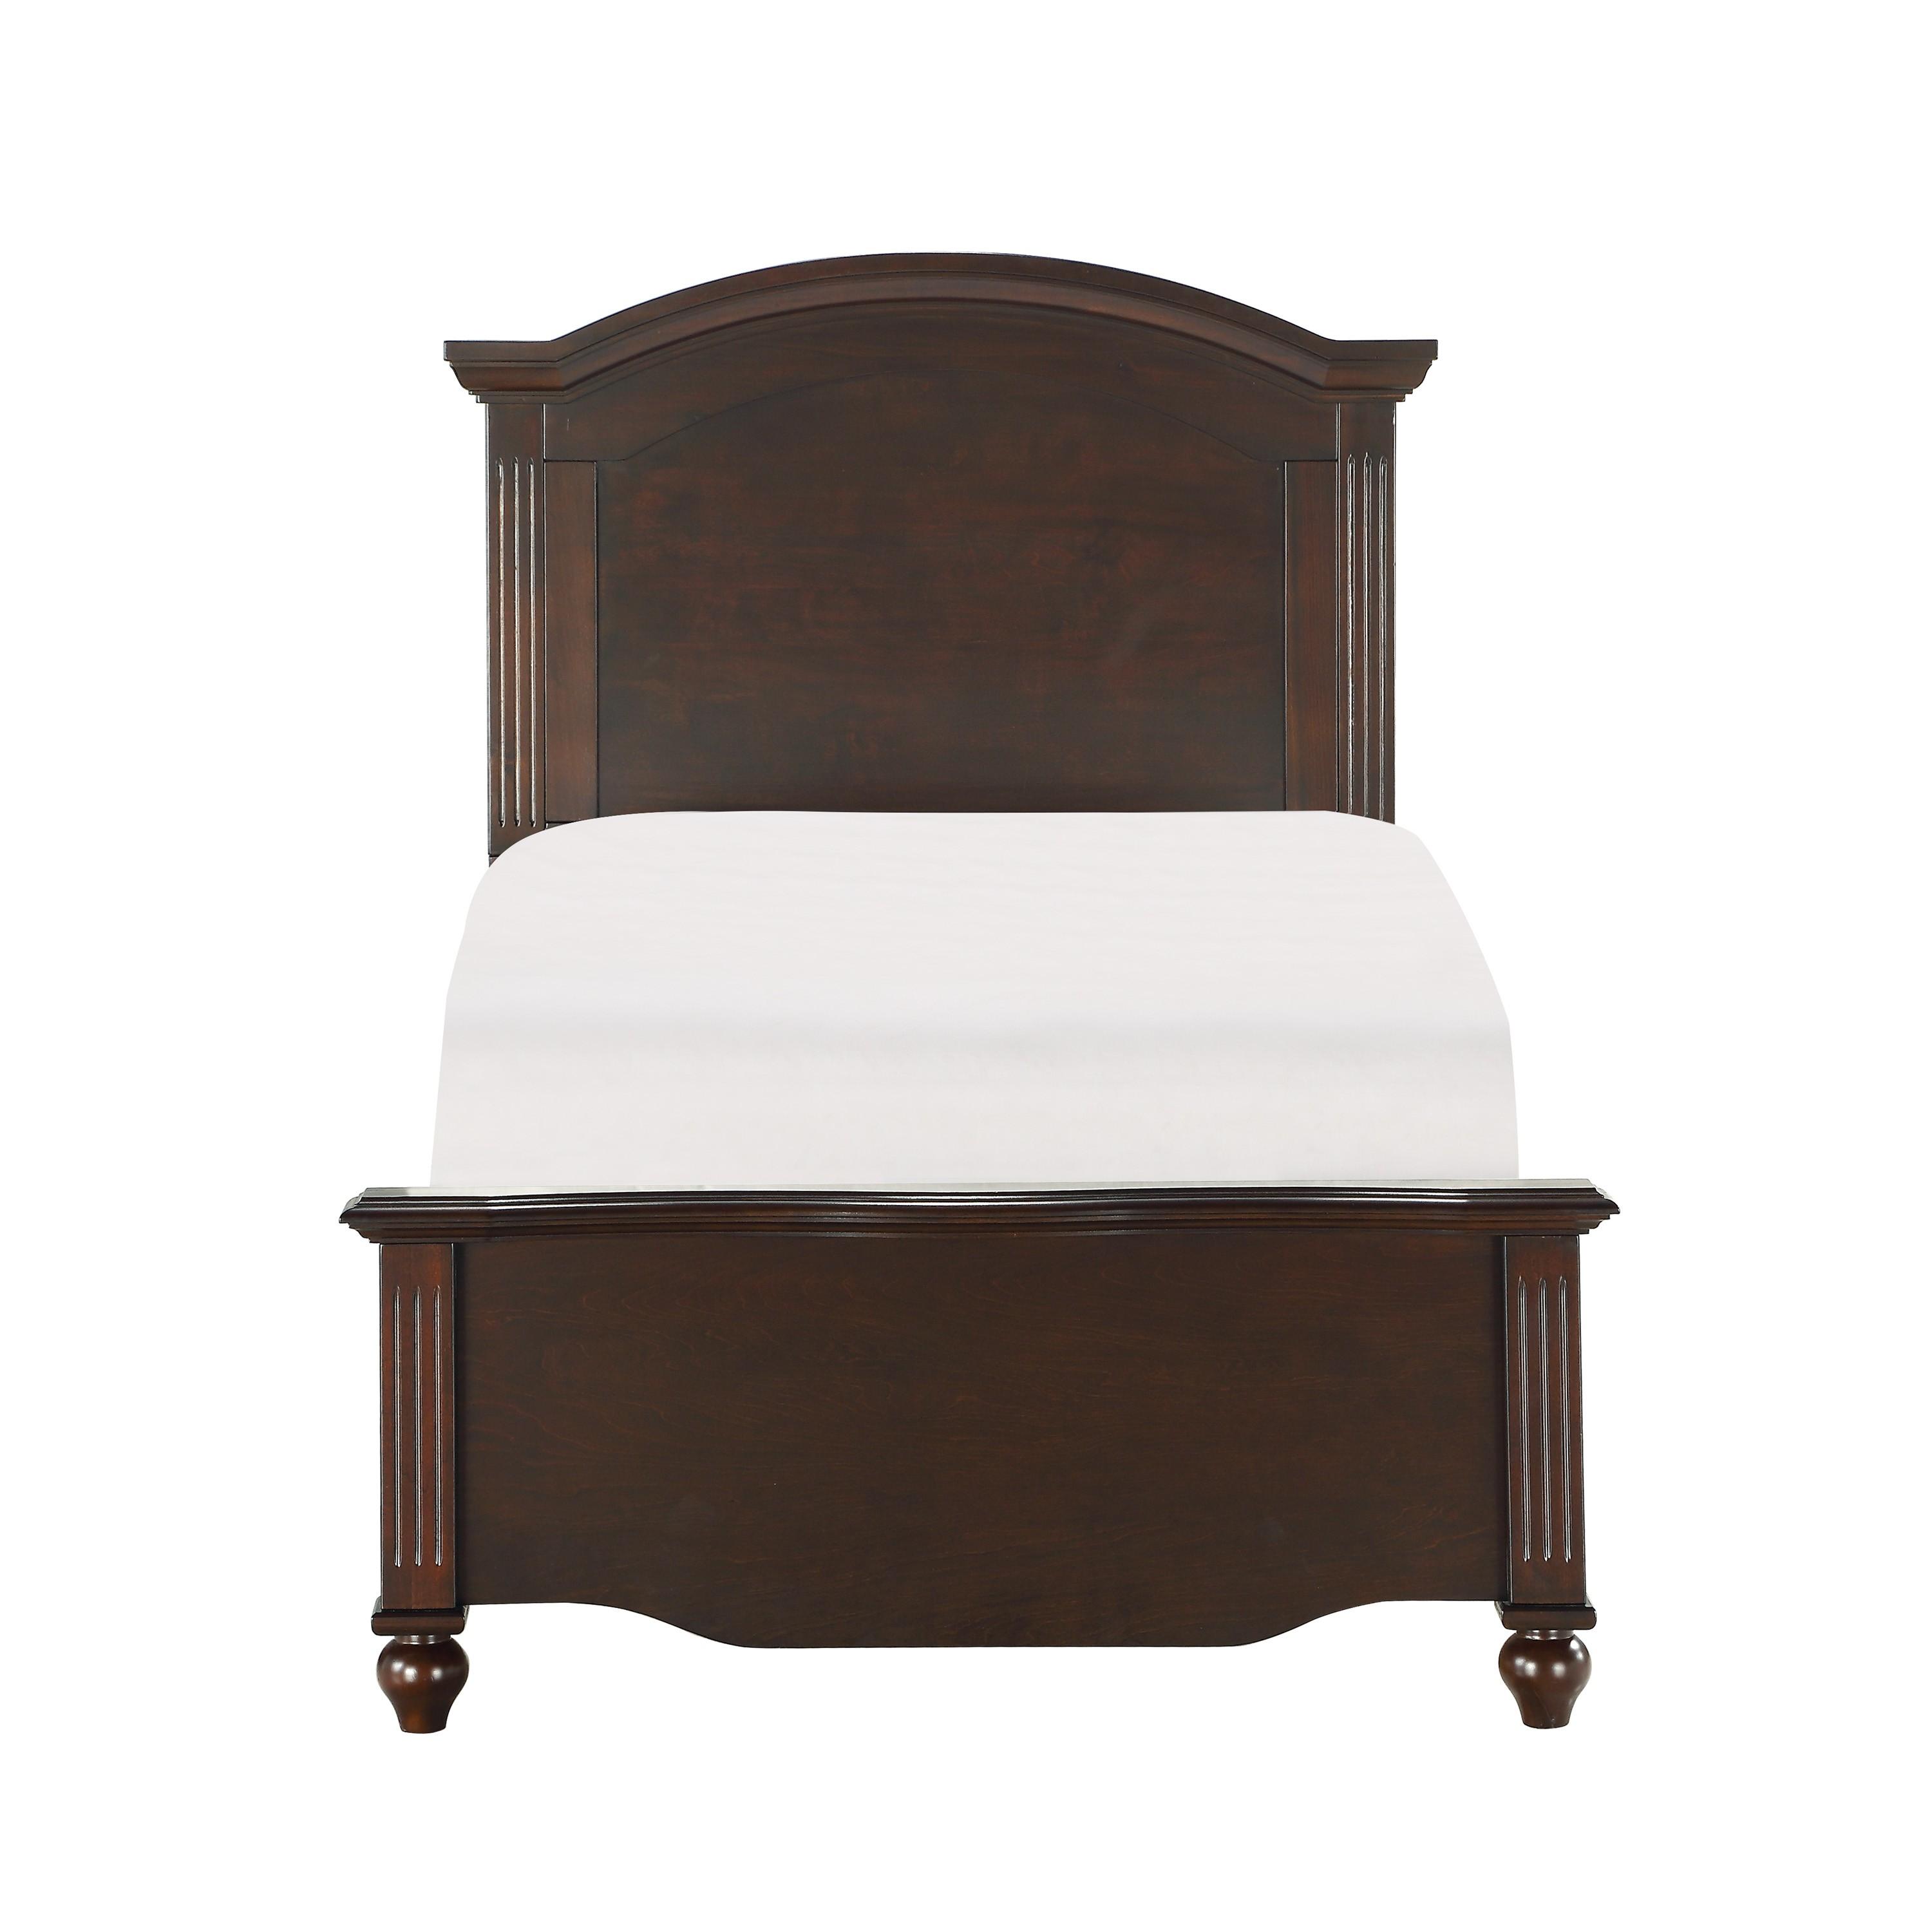 

    
Transitional Espresso Wood Full Bed Homelegance 2058CF-1* Meghan
